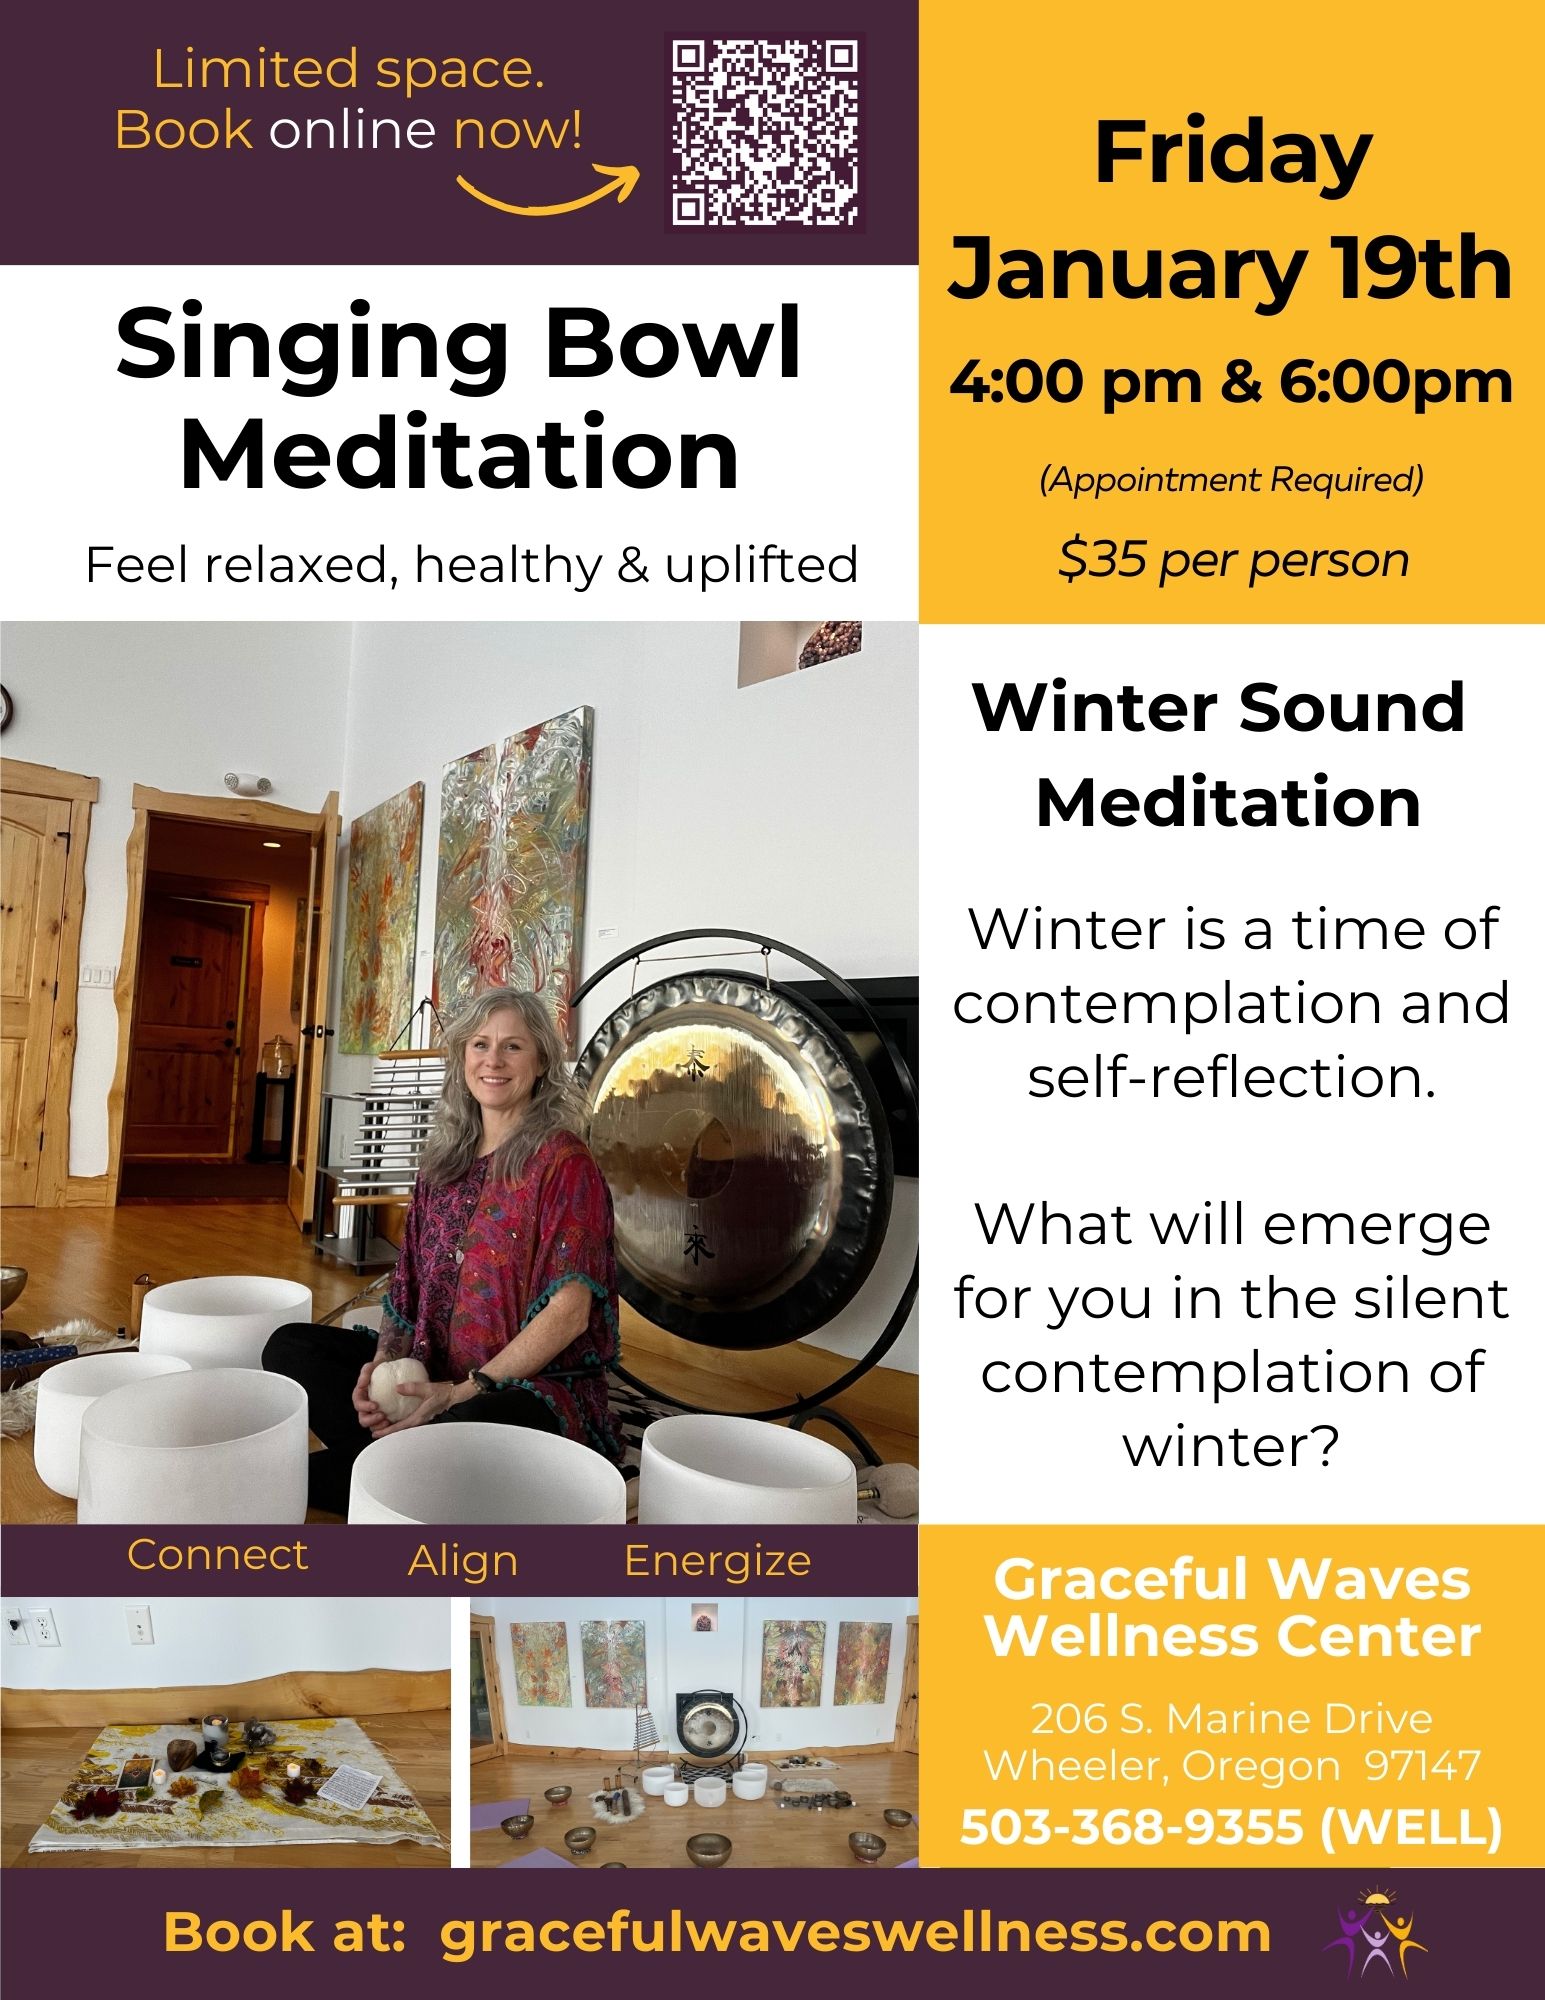 Copy of Singing Bowl Meditation 102023 2 iCPrXk.tmp